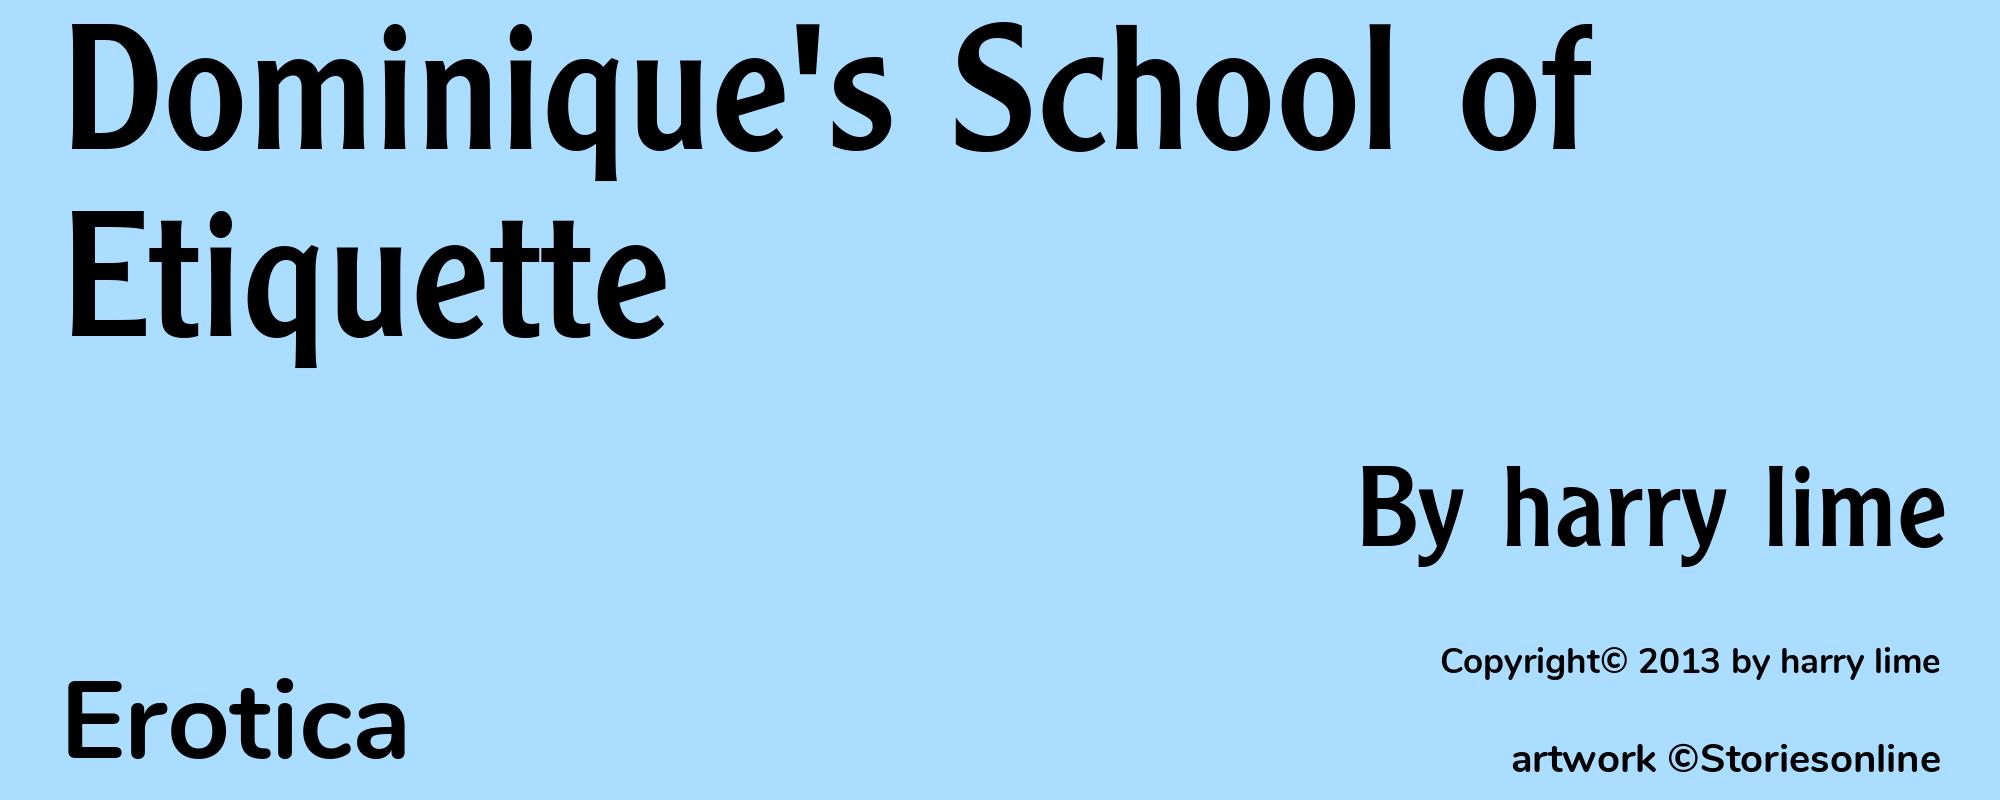 Dominique's School of Etiquette - Cover